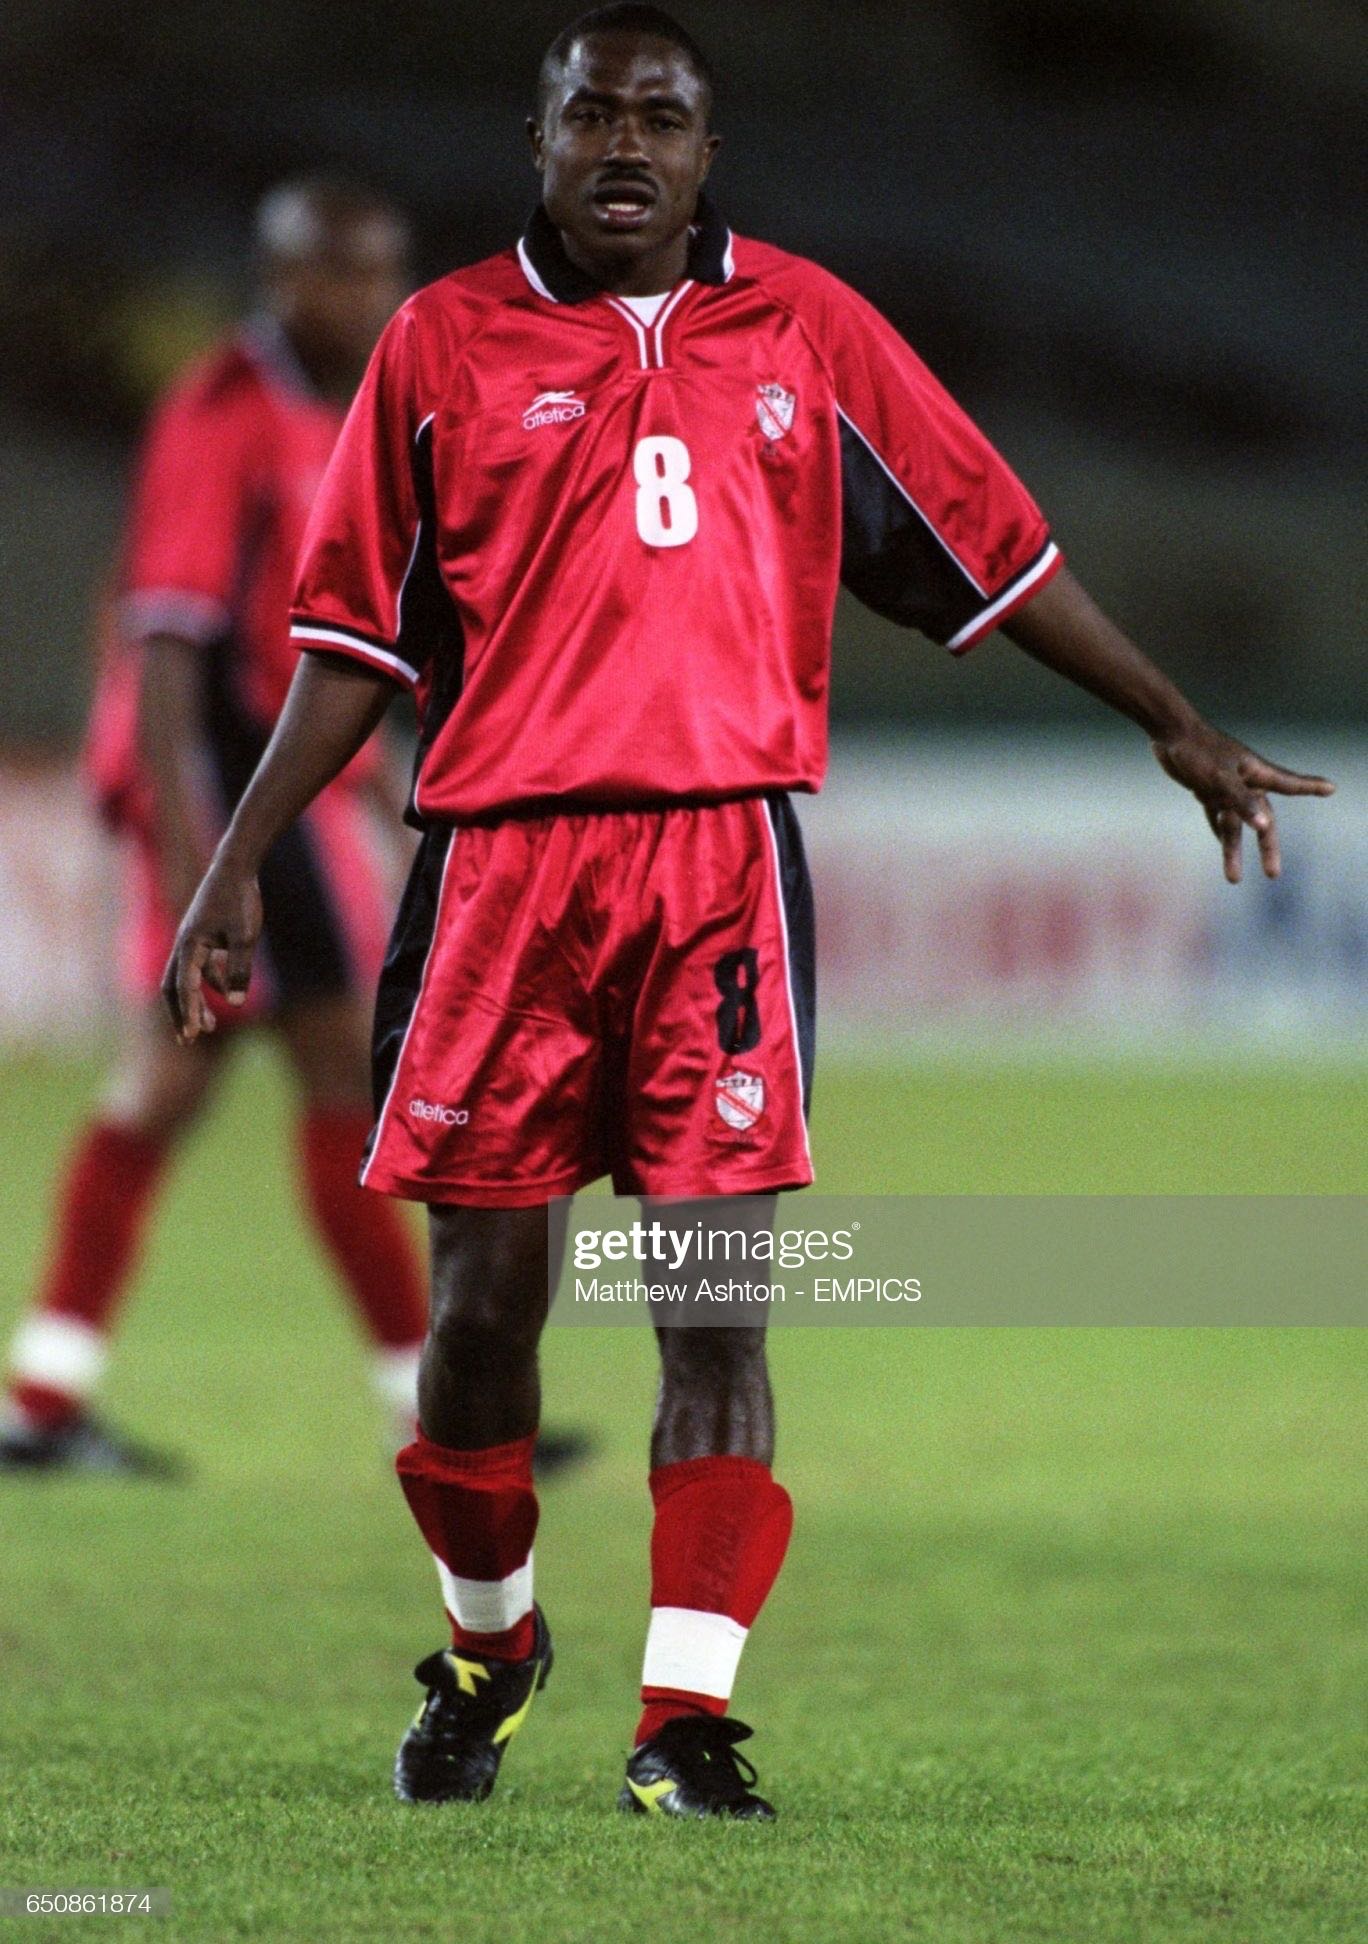 Trinidad and Tobago's Angus Eve (Photo by Matthew Ashton/EMPICS via Getty Images) - CONCACAF Gold Cup 2000 - Semi Final - Trinidad and Tobago v Canada